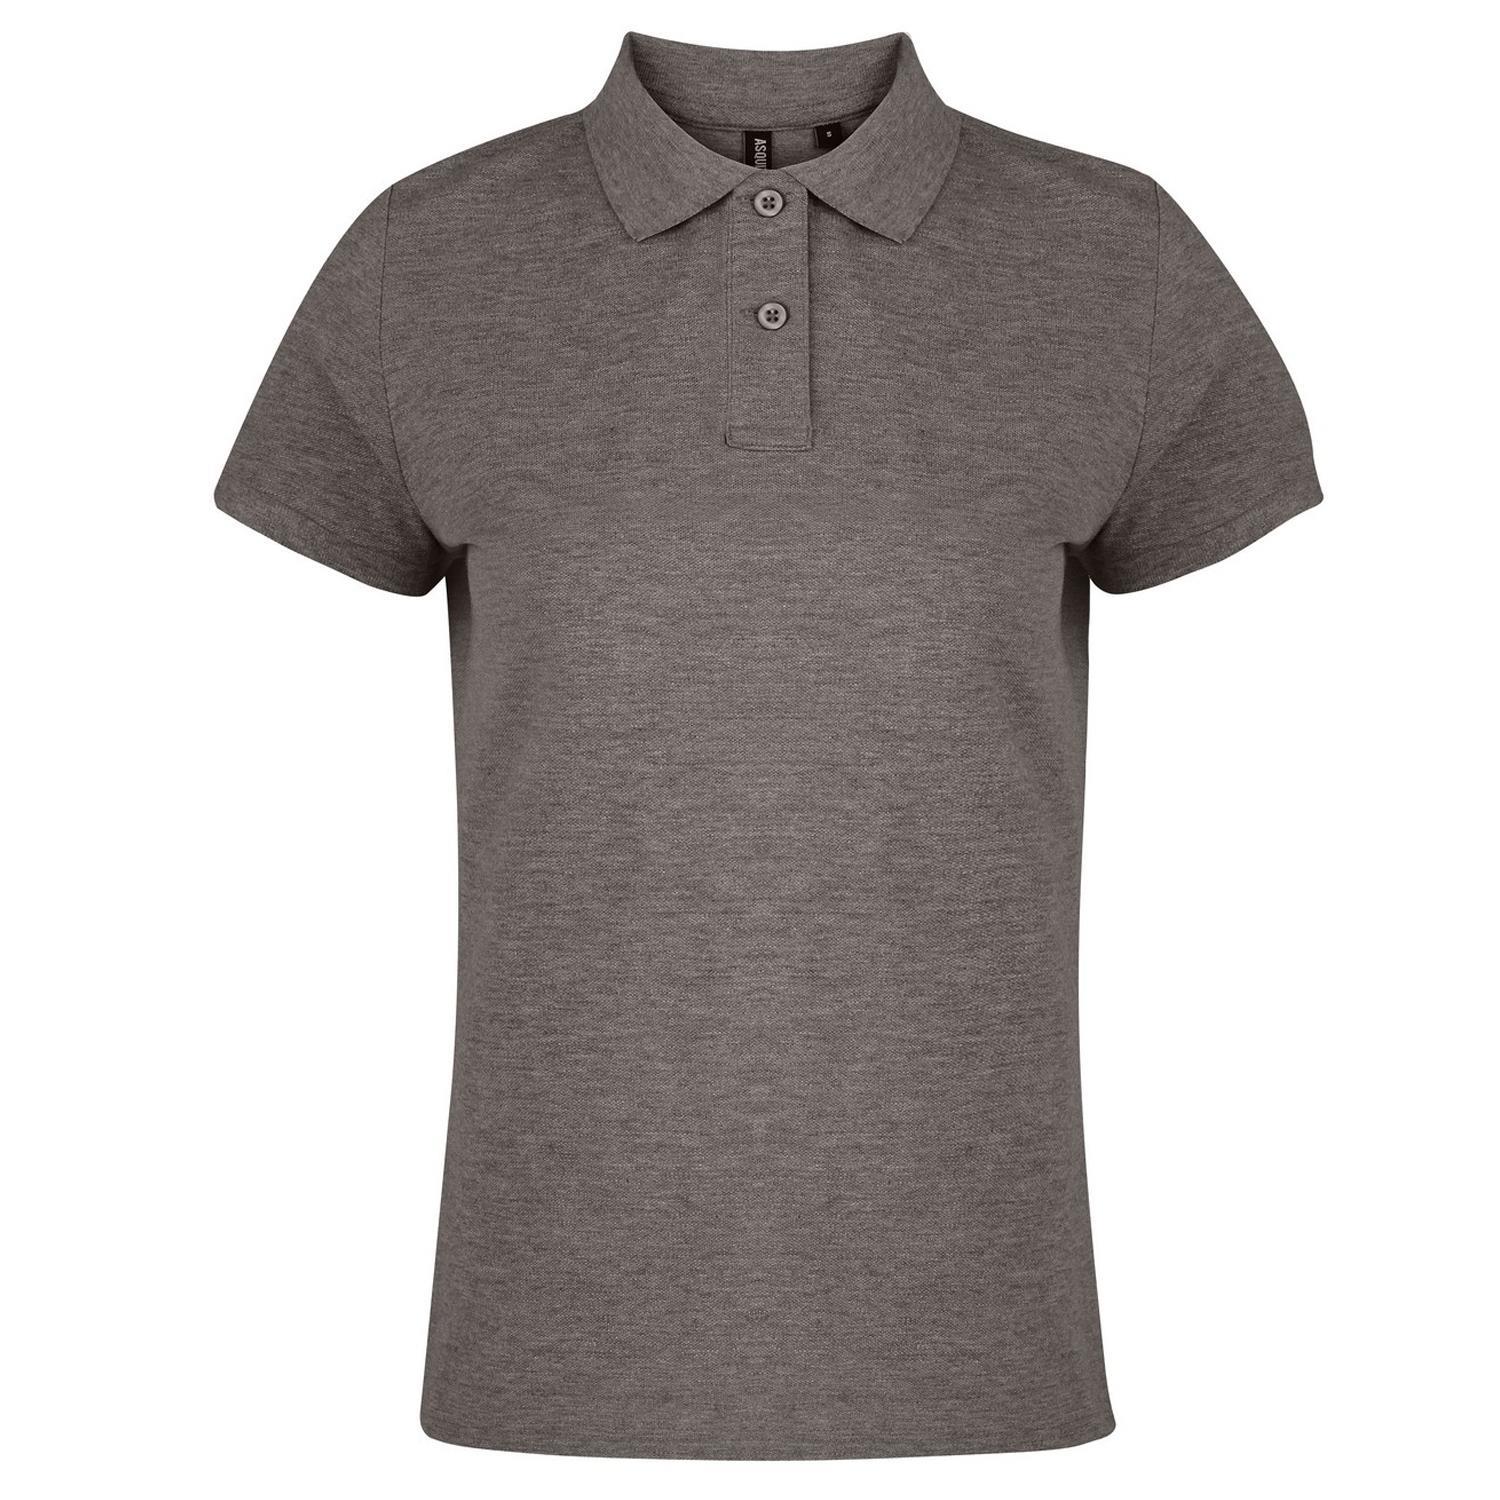 Asquith & Fox Womens/Ladies Plain Short Sleeve Polo Shirt (Charcoal) (S)